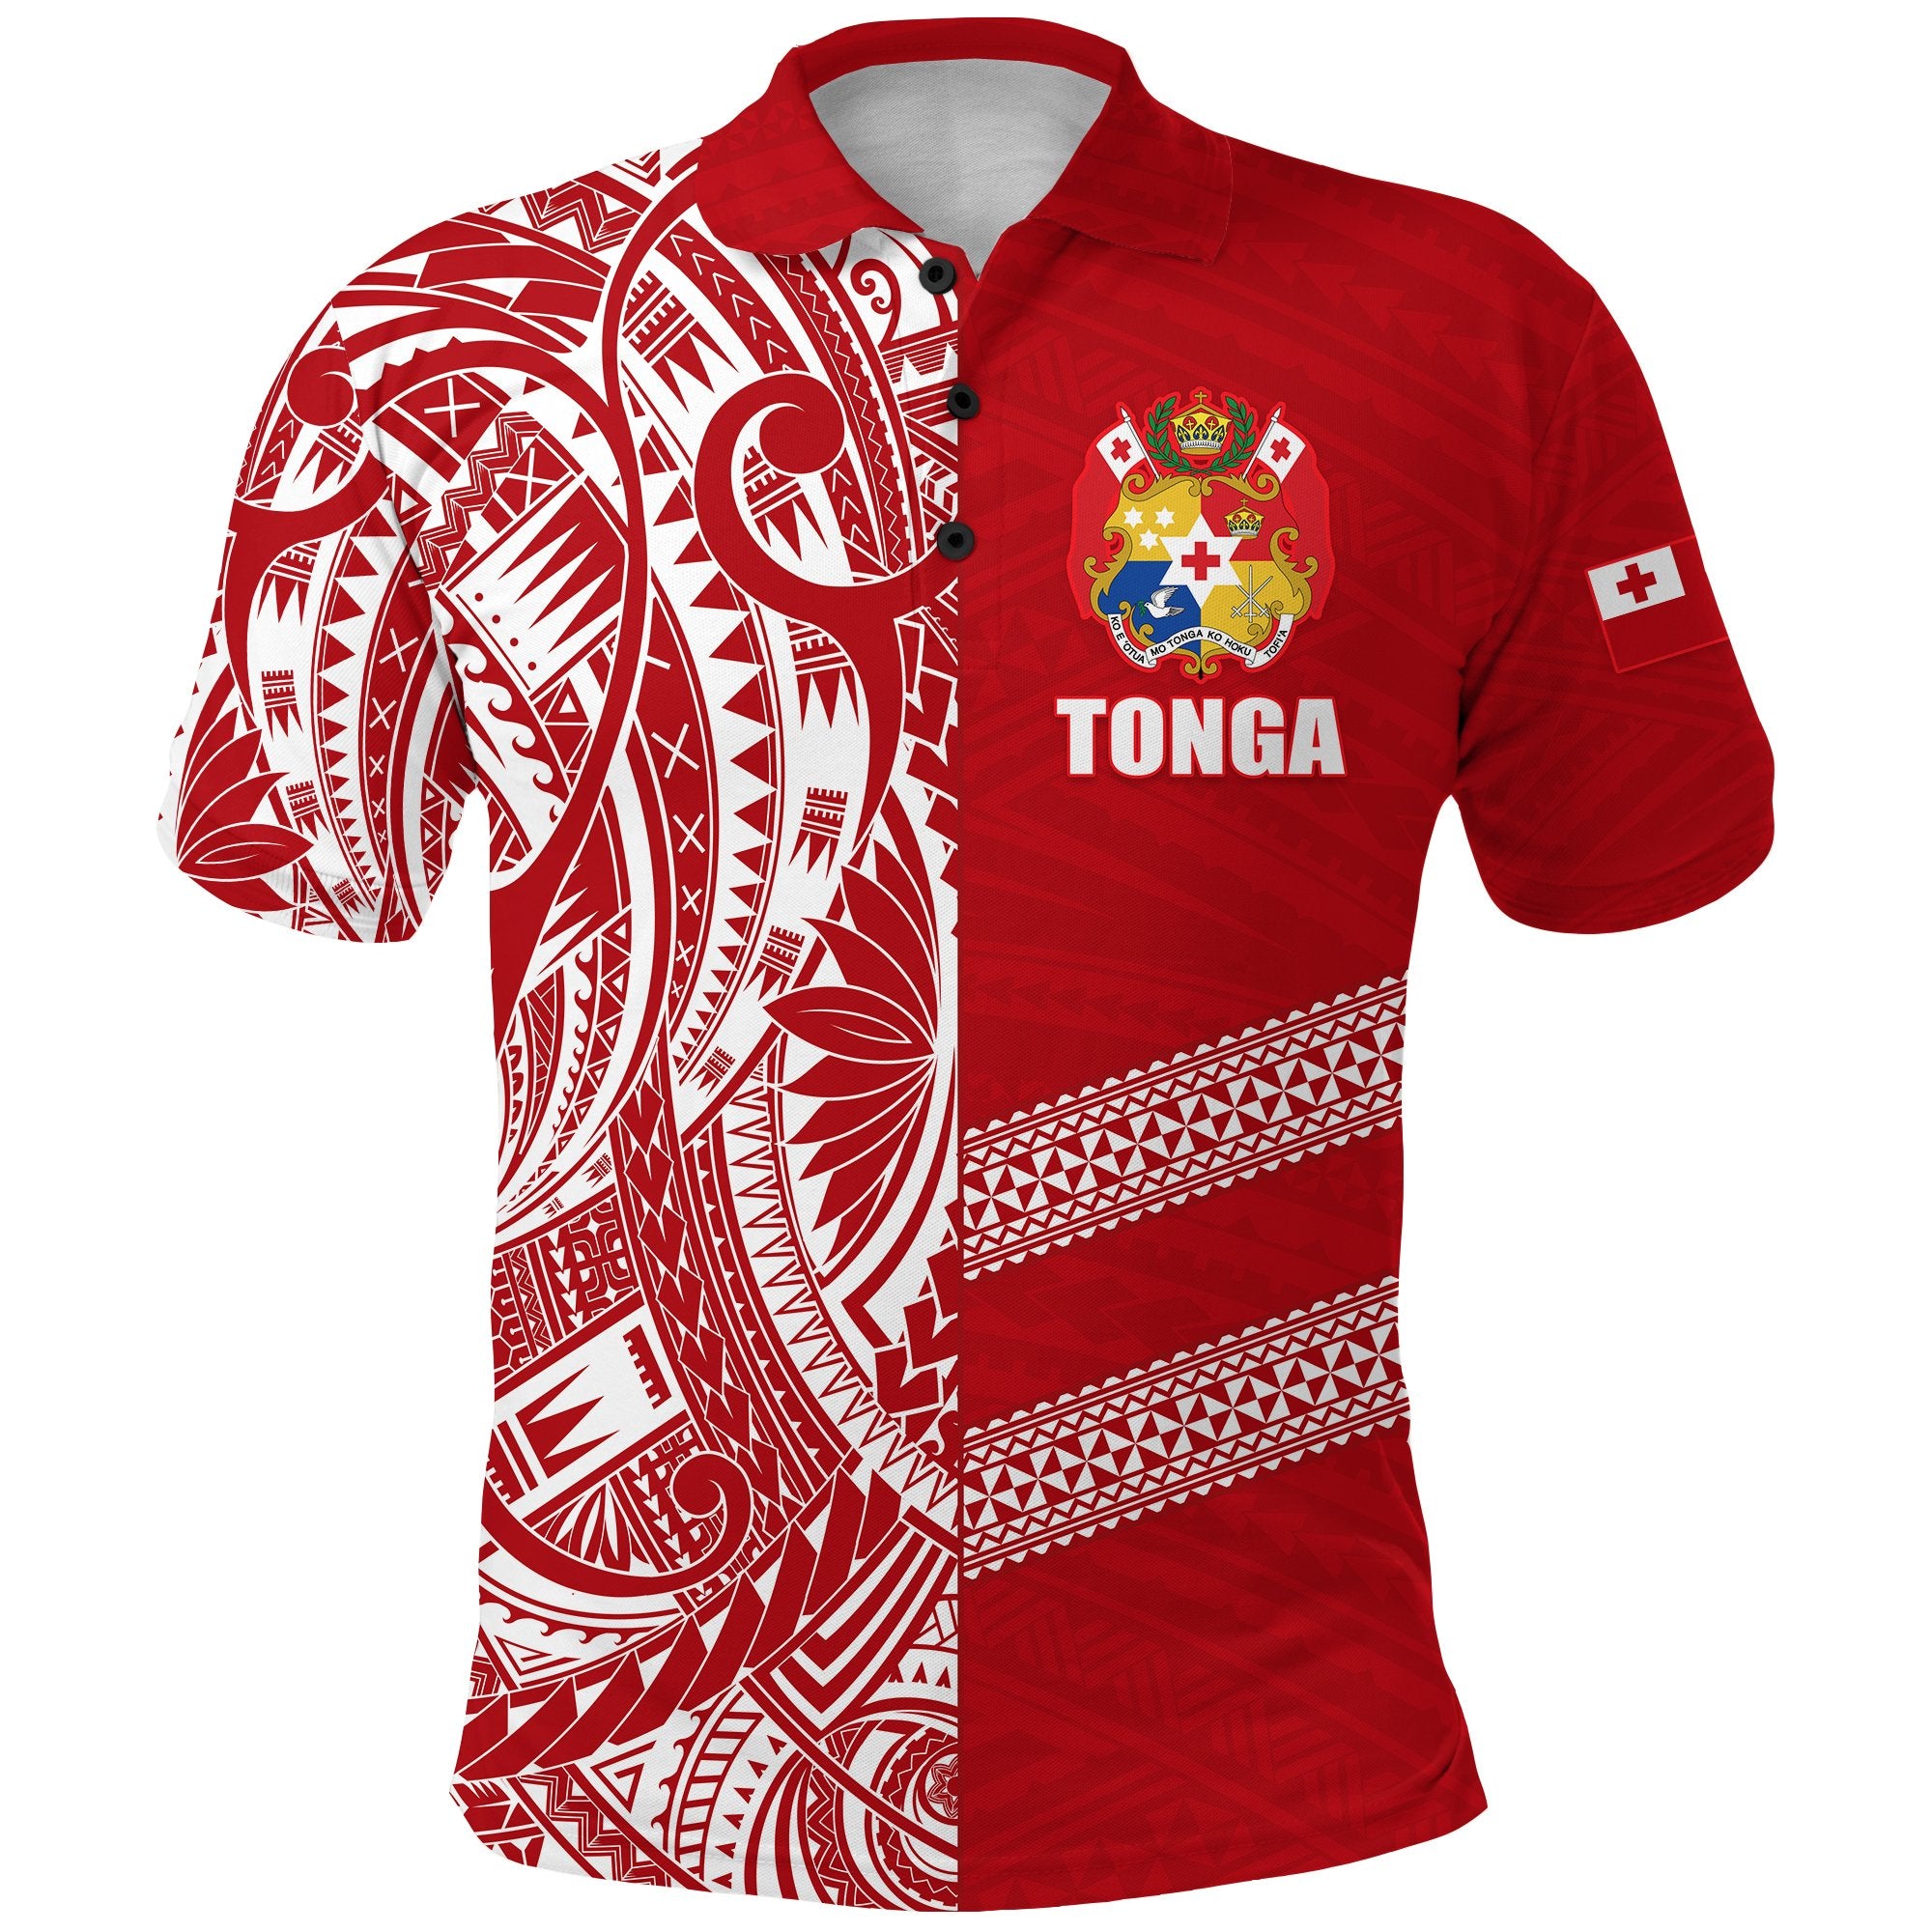 Tonga Rugby Polo Shirt Rustic Unisex Red - Polynesian Pride